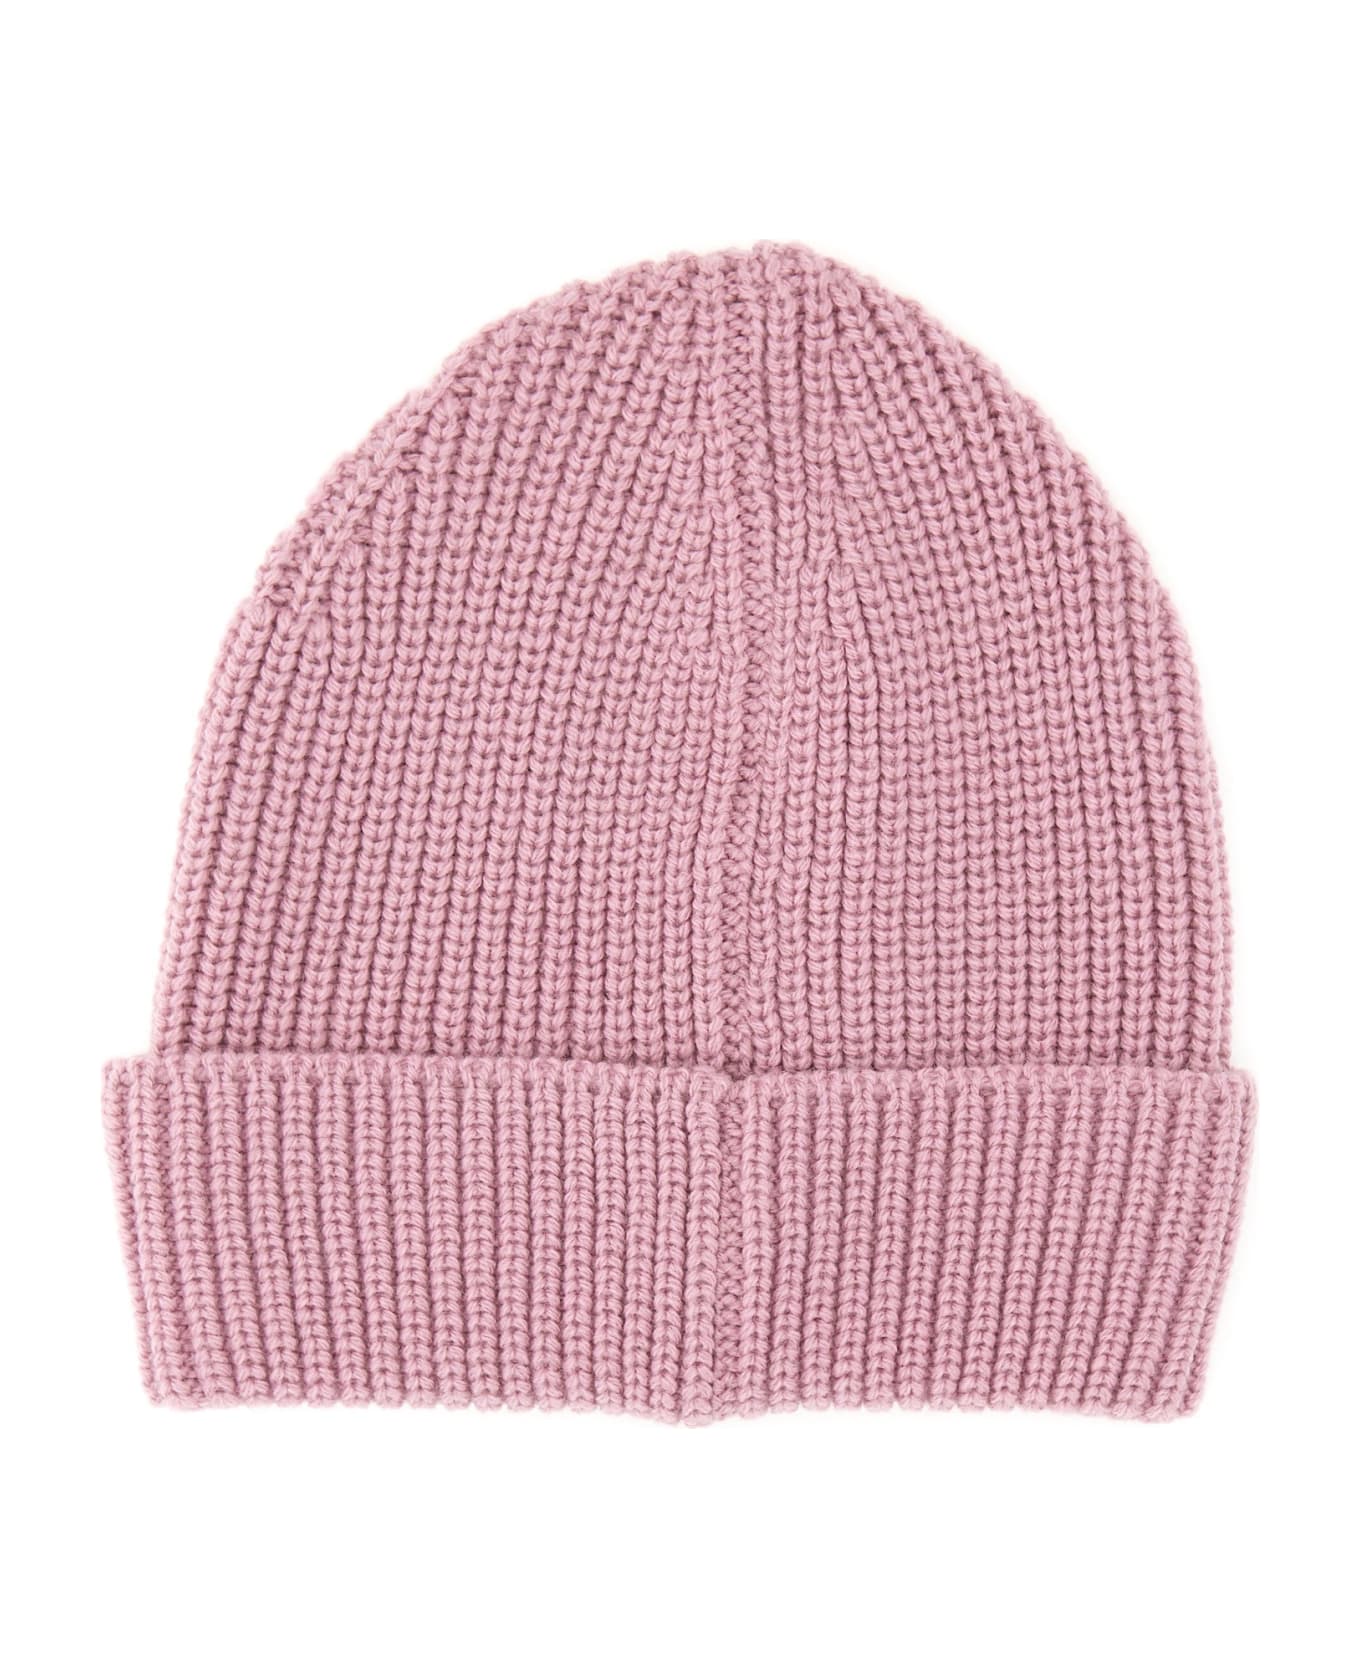 Barrow Beanie Hat - Pink Lavander